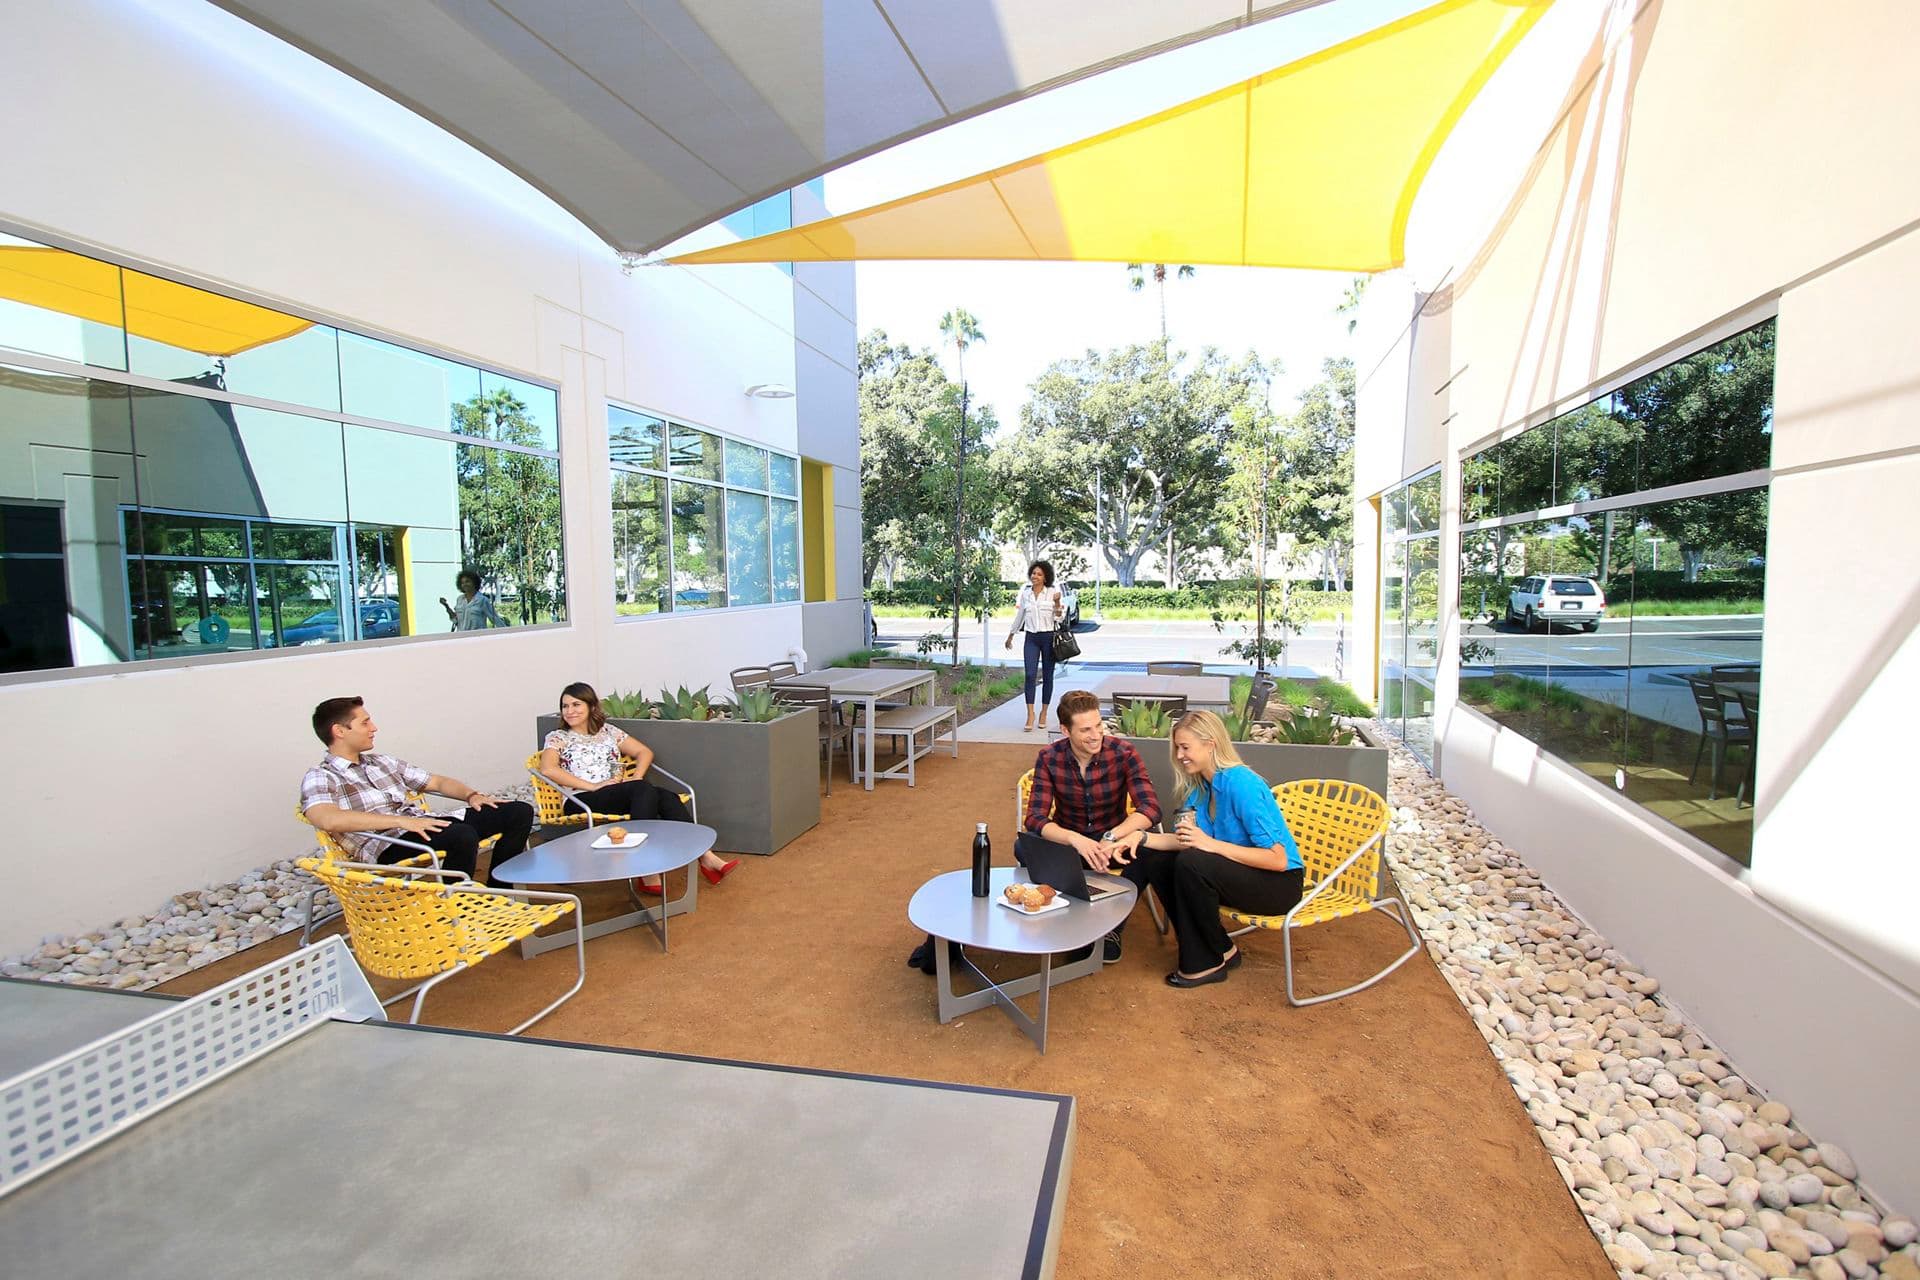  Outdoor Workspace - Alton Plaza - 15205-15295 Alton Parkway  Irvine, CA 92618